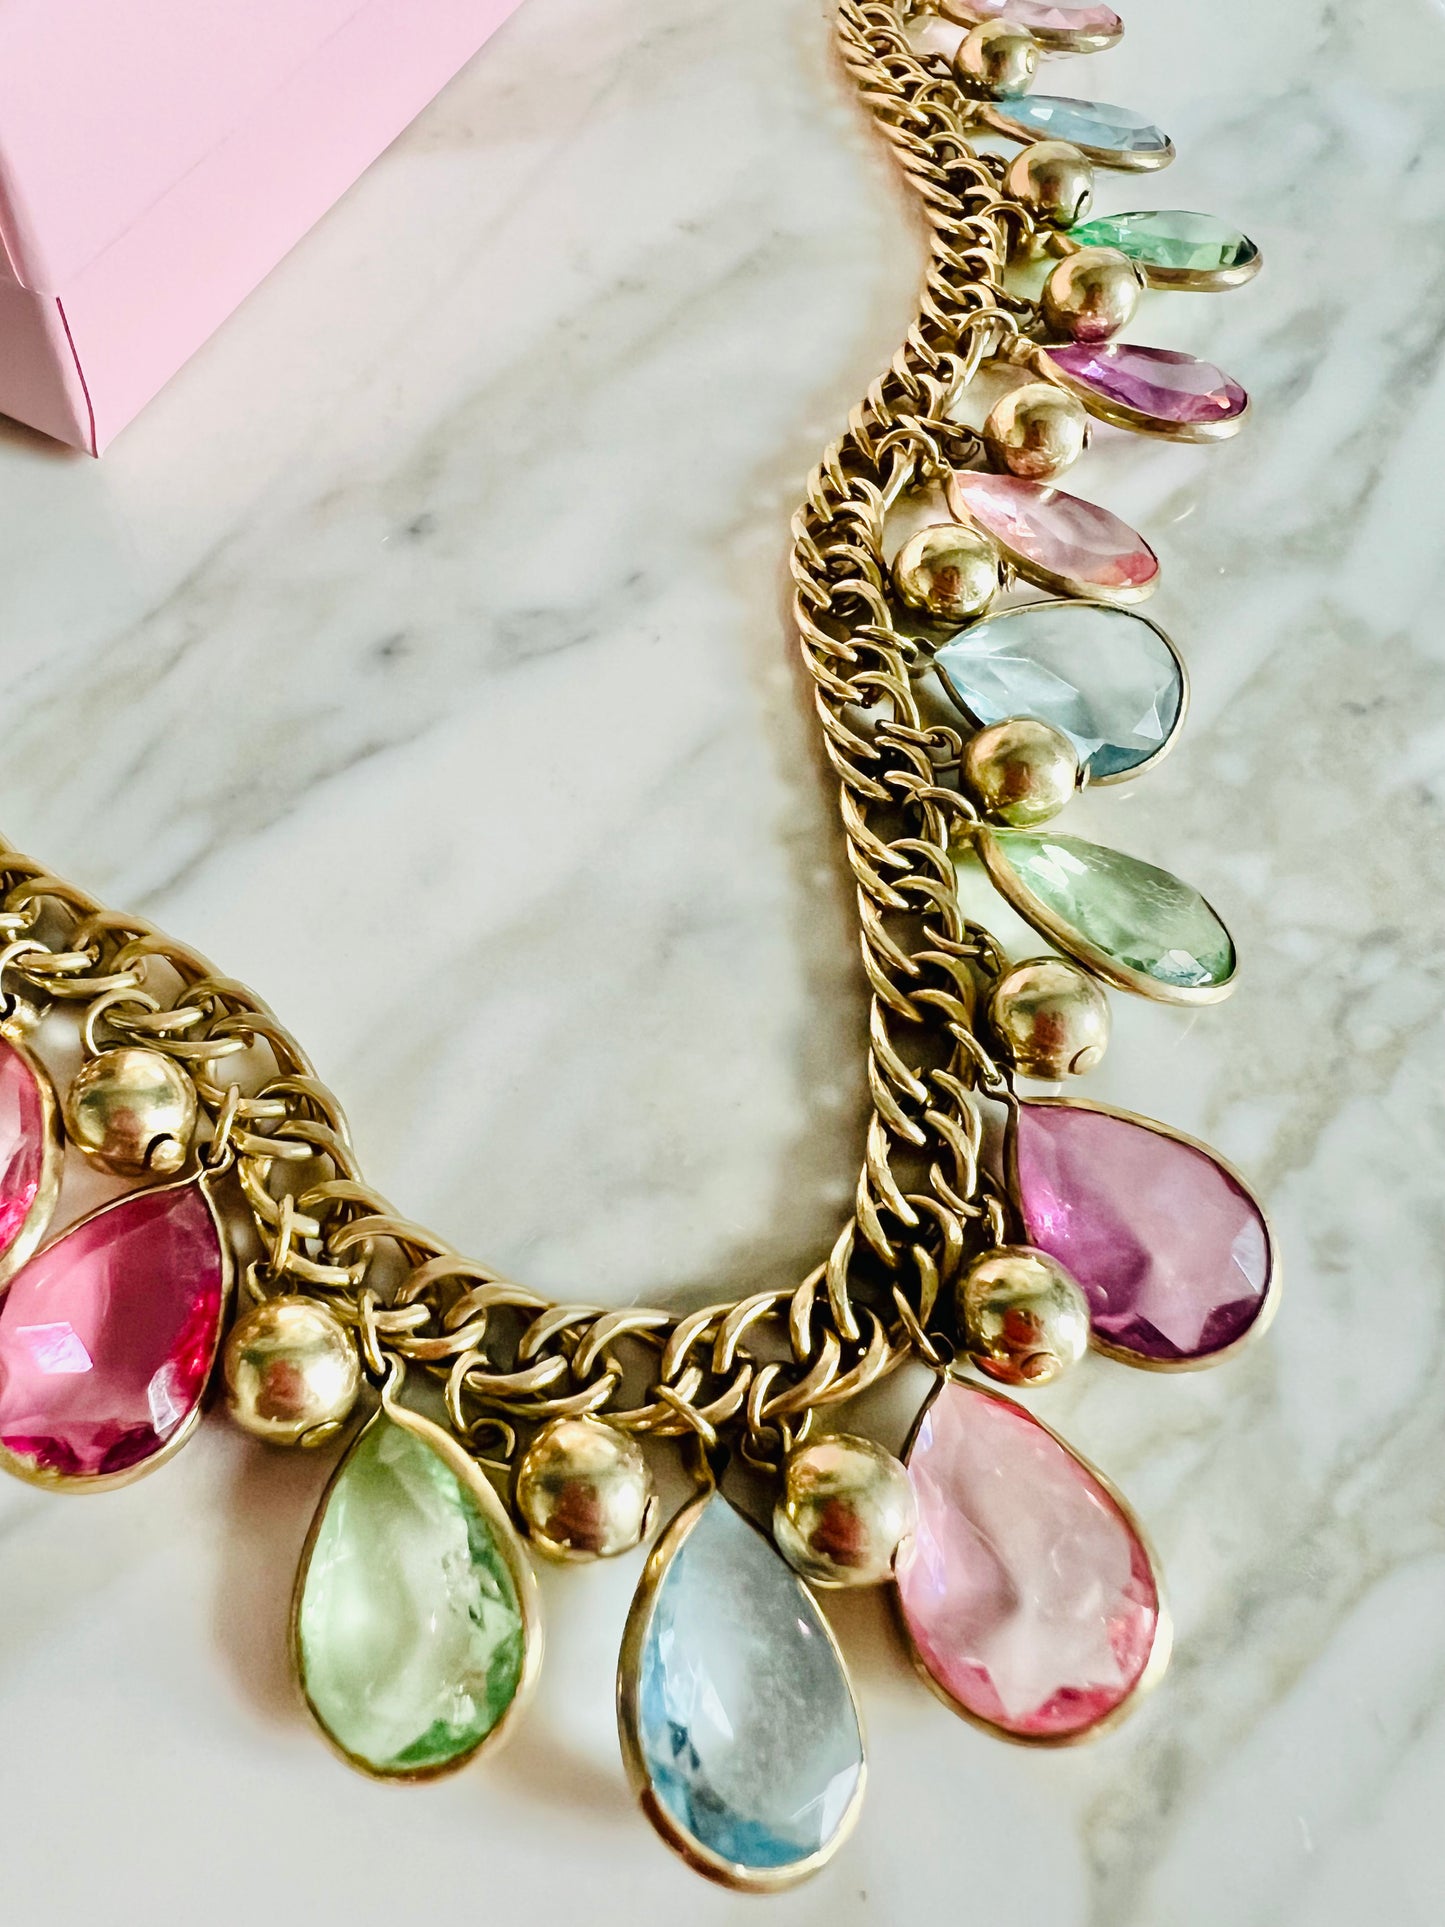 Vintage Pastel Pink Teardrop Chiclet Style Necklace